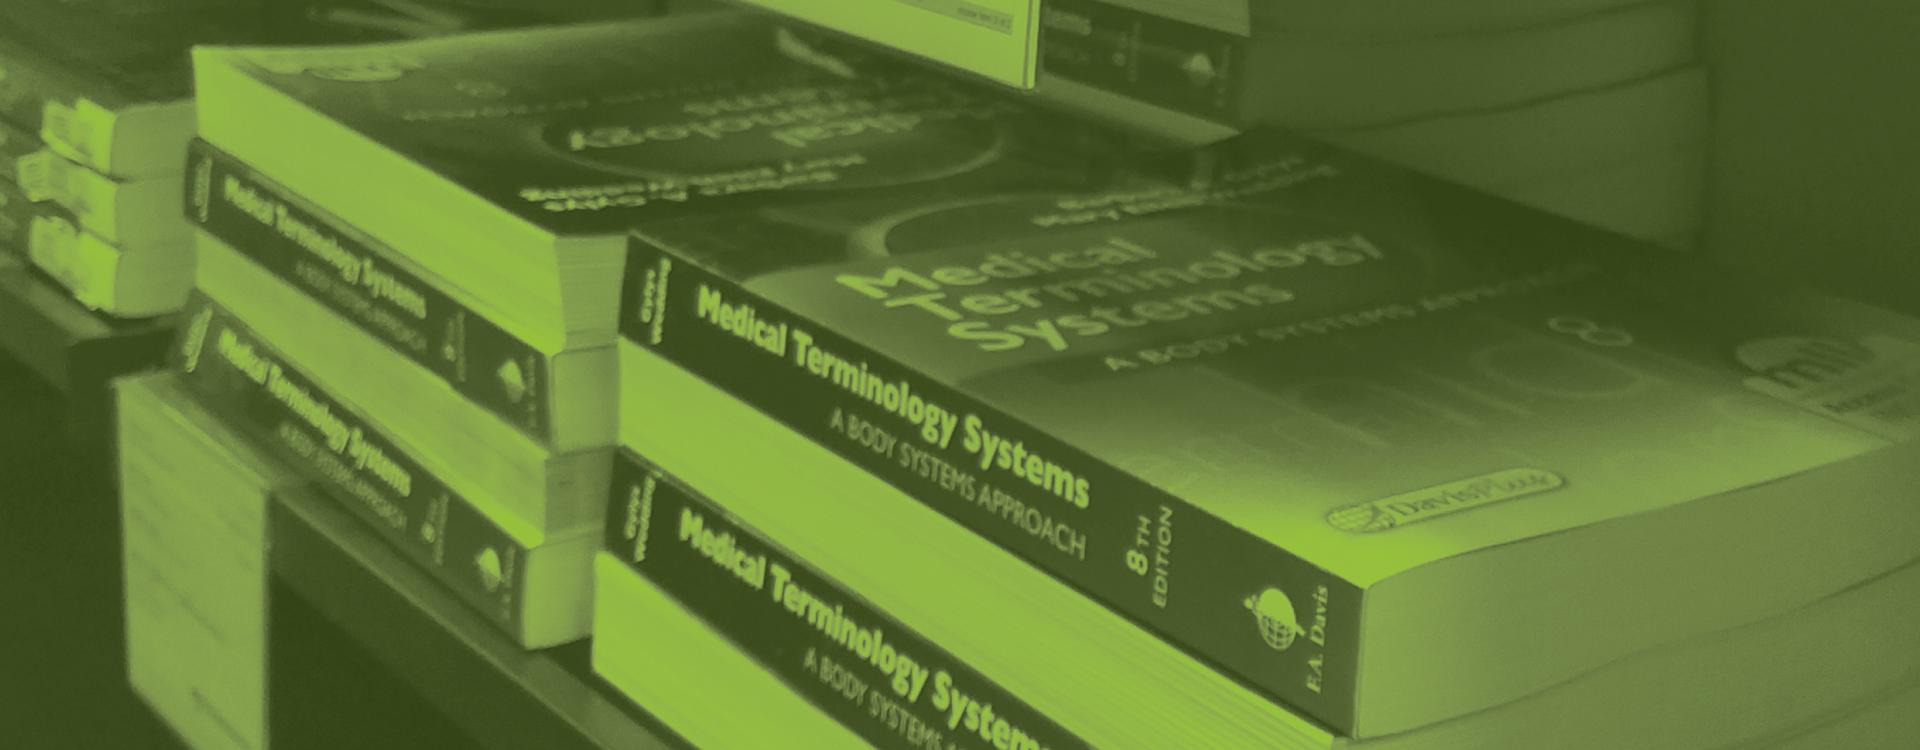 close up photo of textbooks